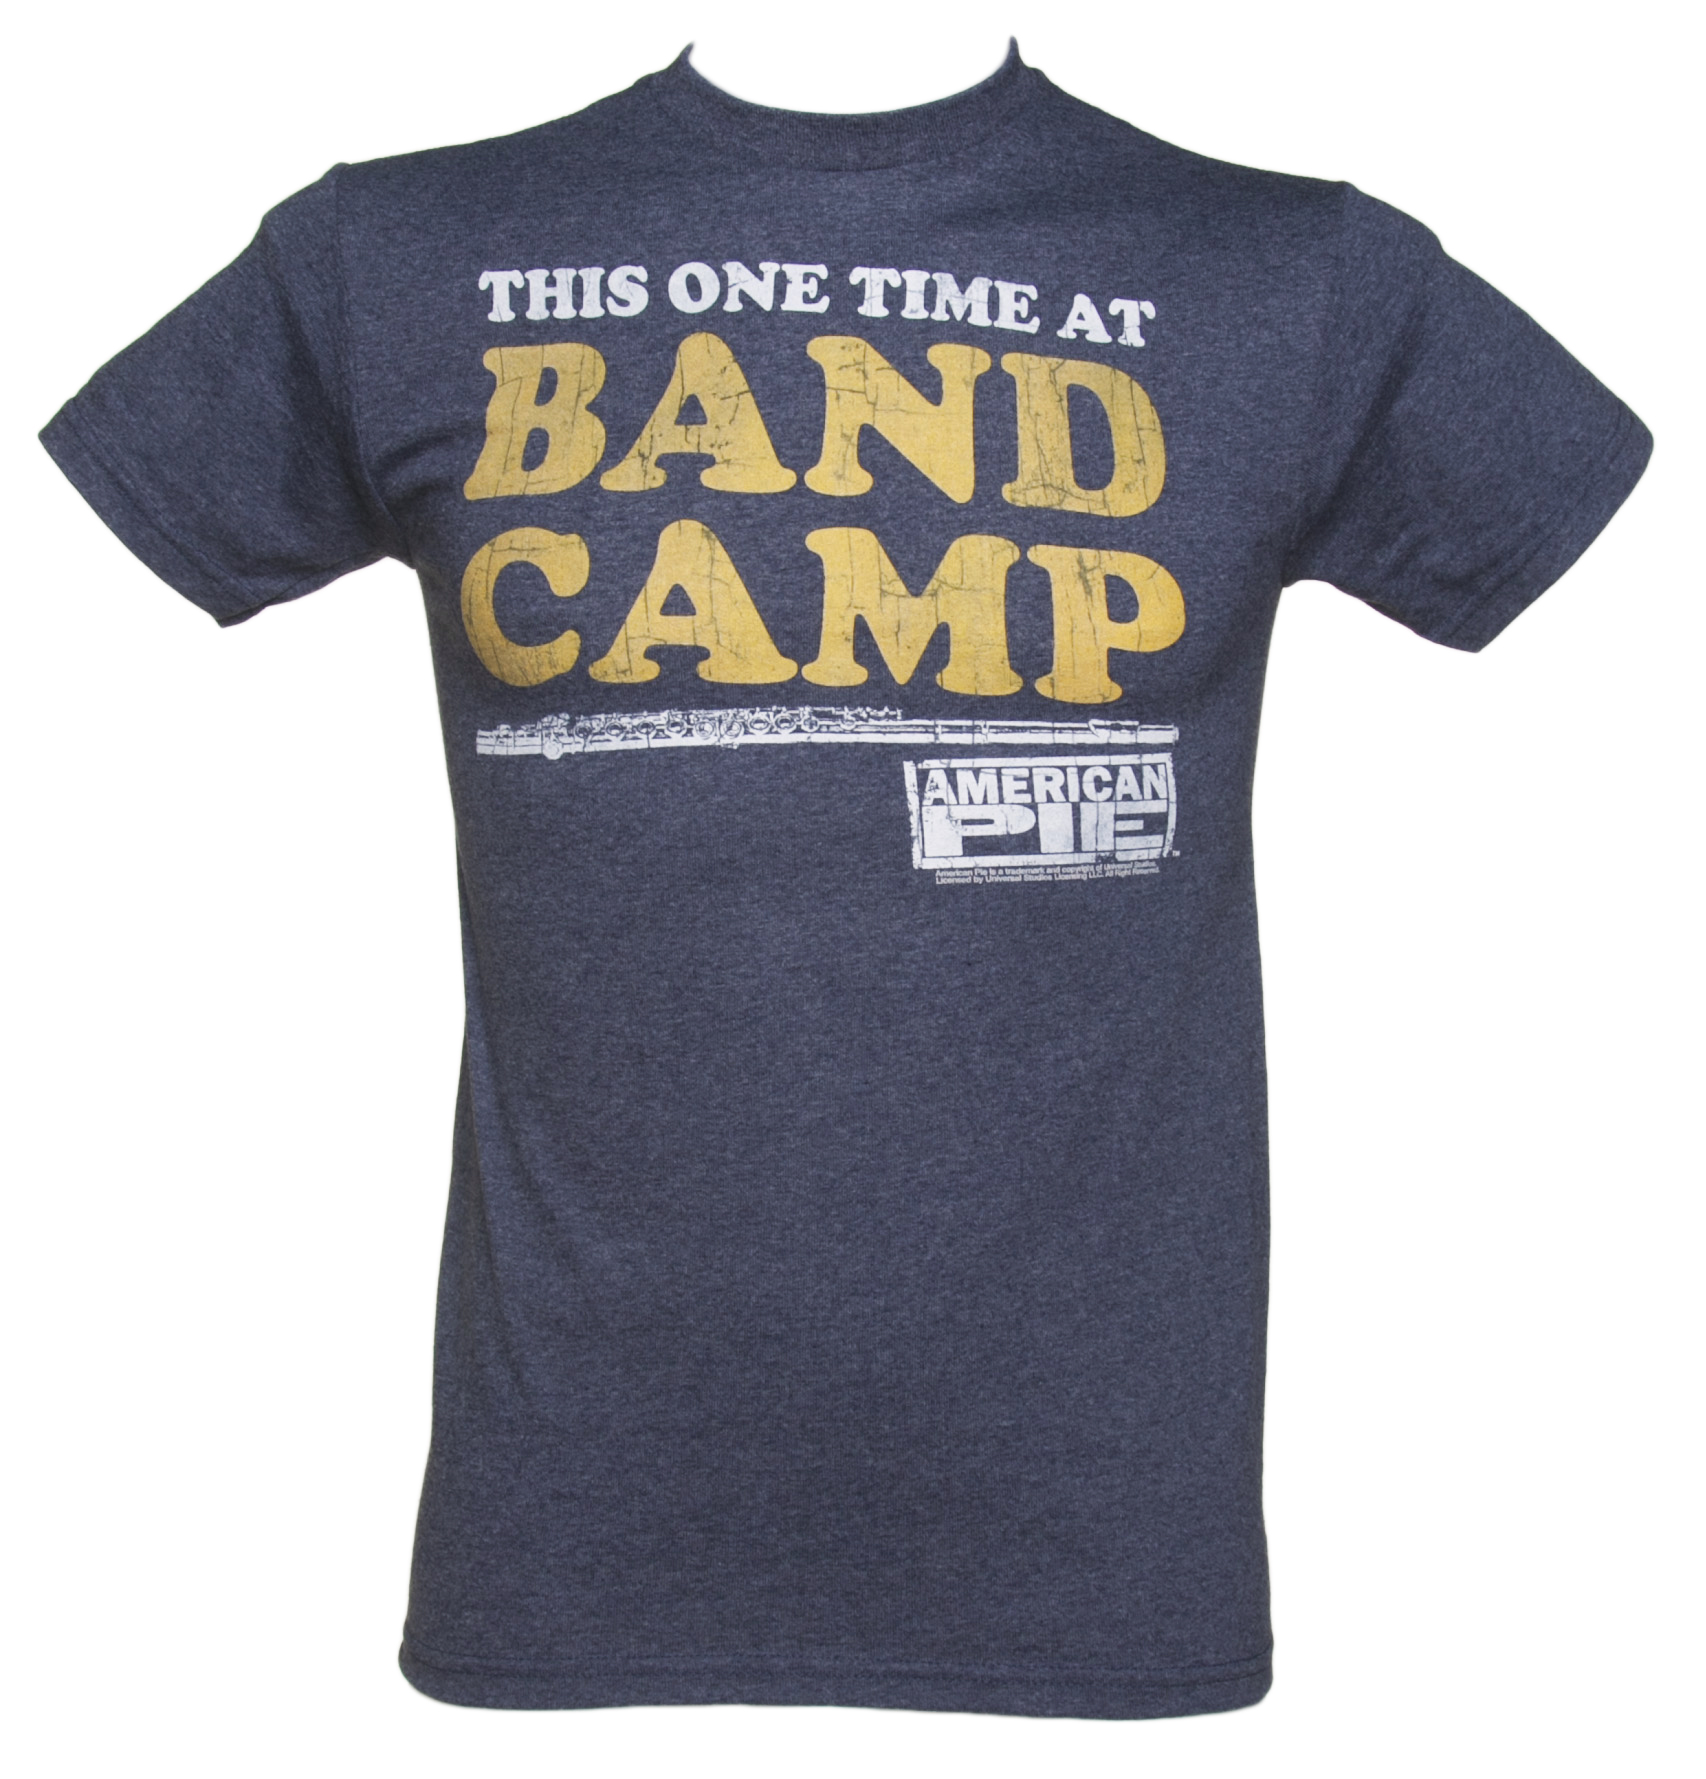 Футболка американский пирог. Футболка Camp. Kings Camps футболка. My people skills are Rusty t Shirt. Band camp